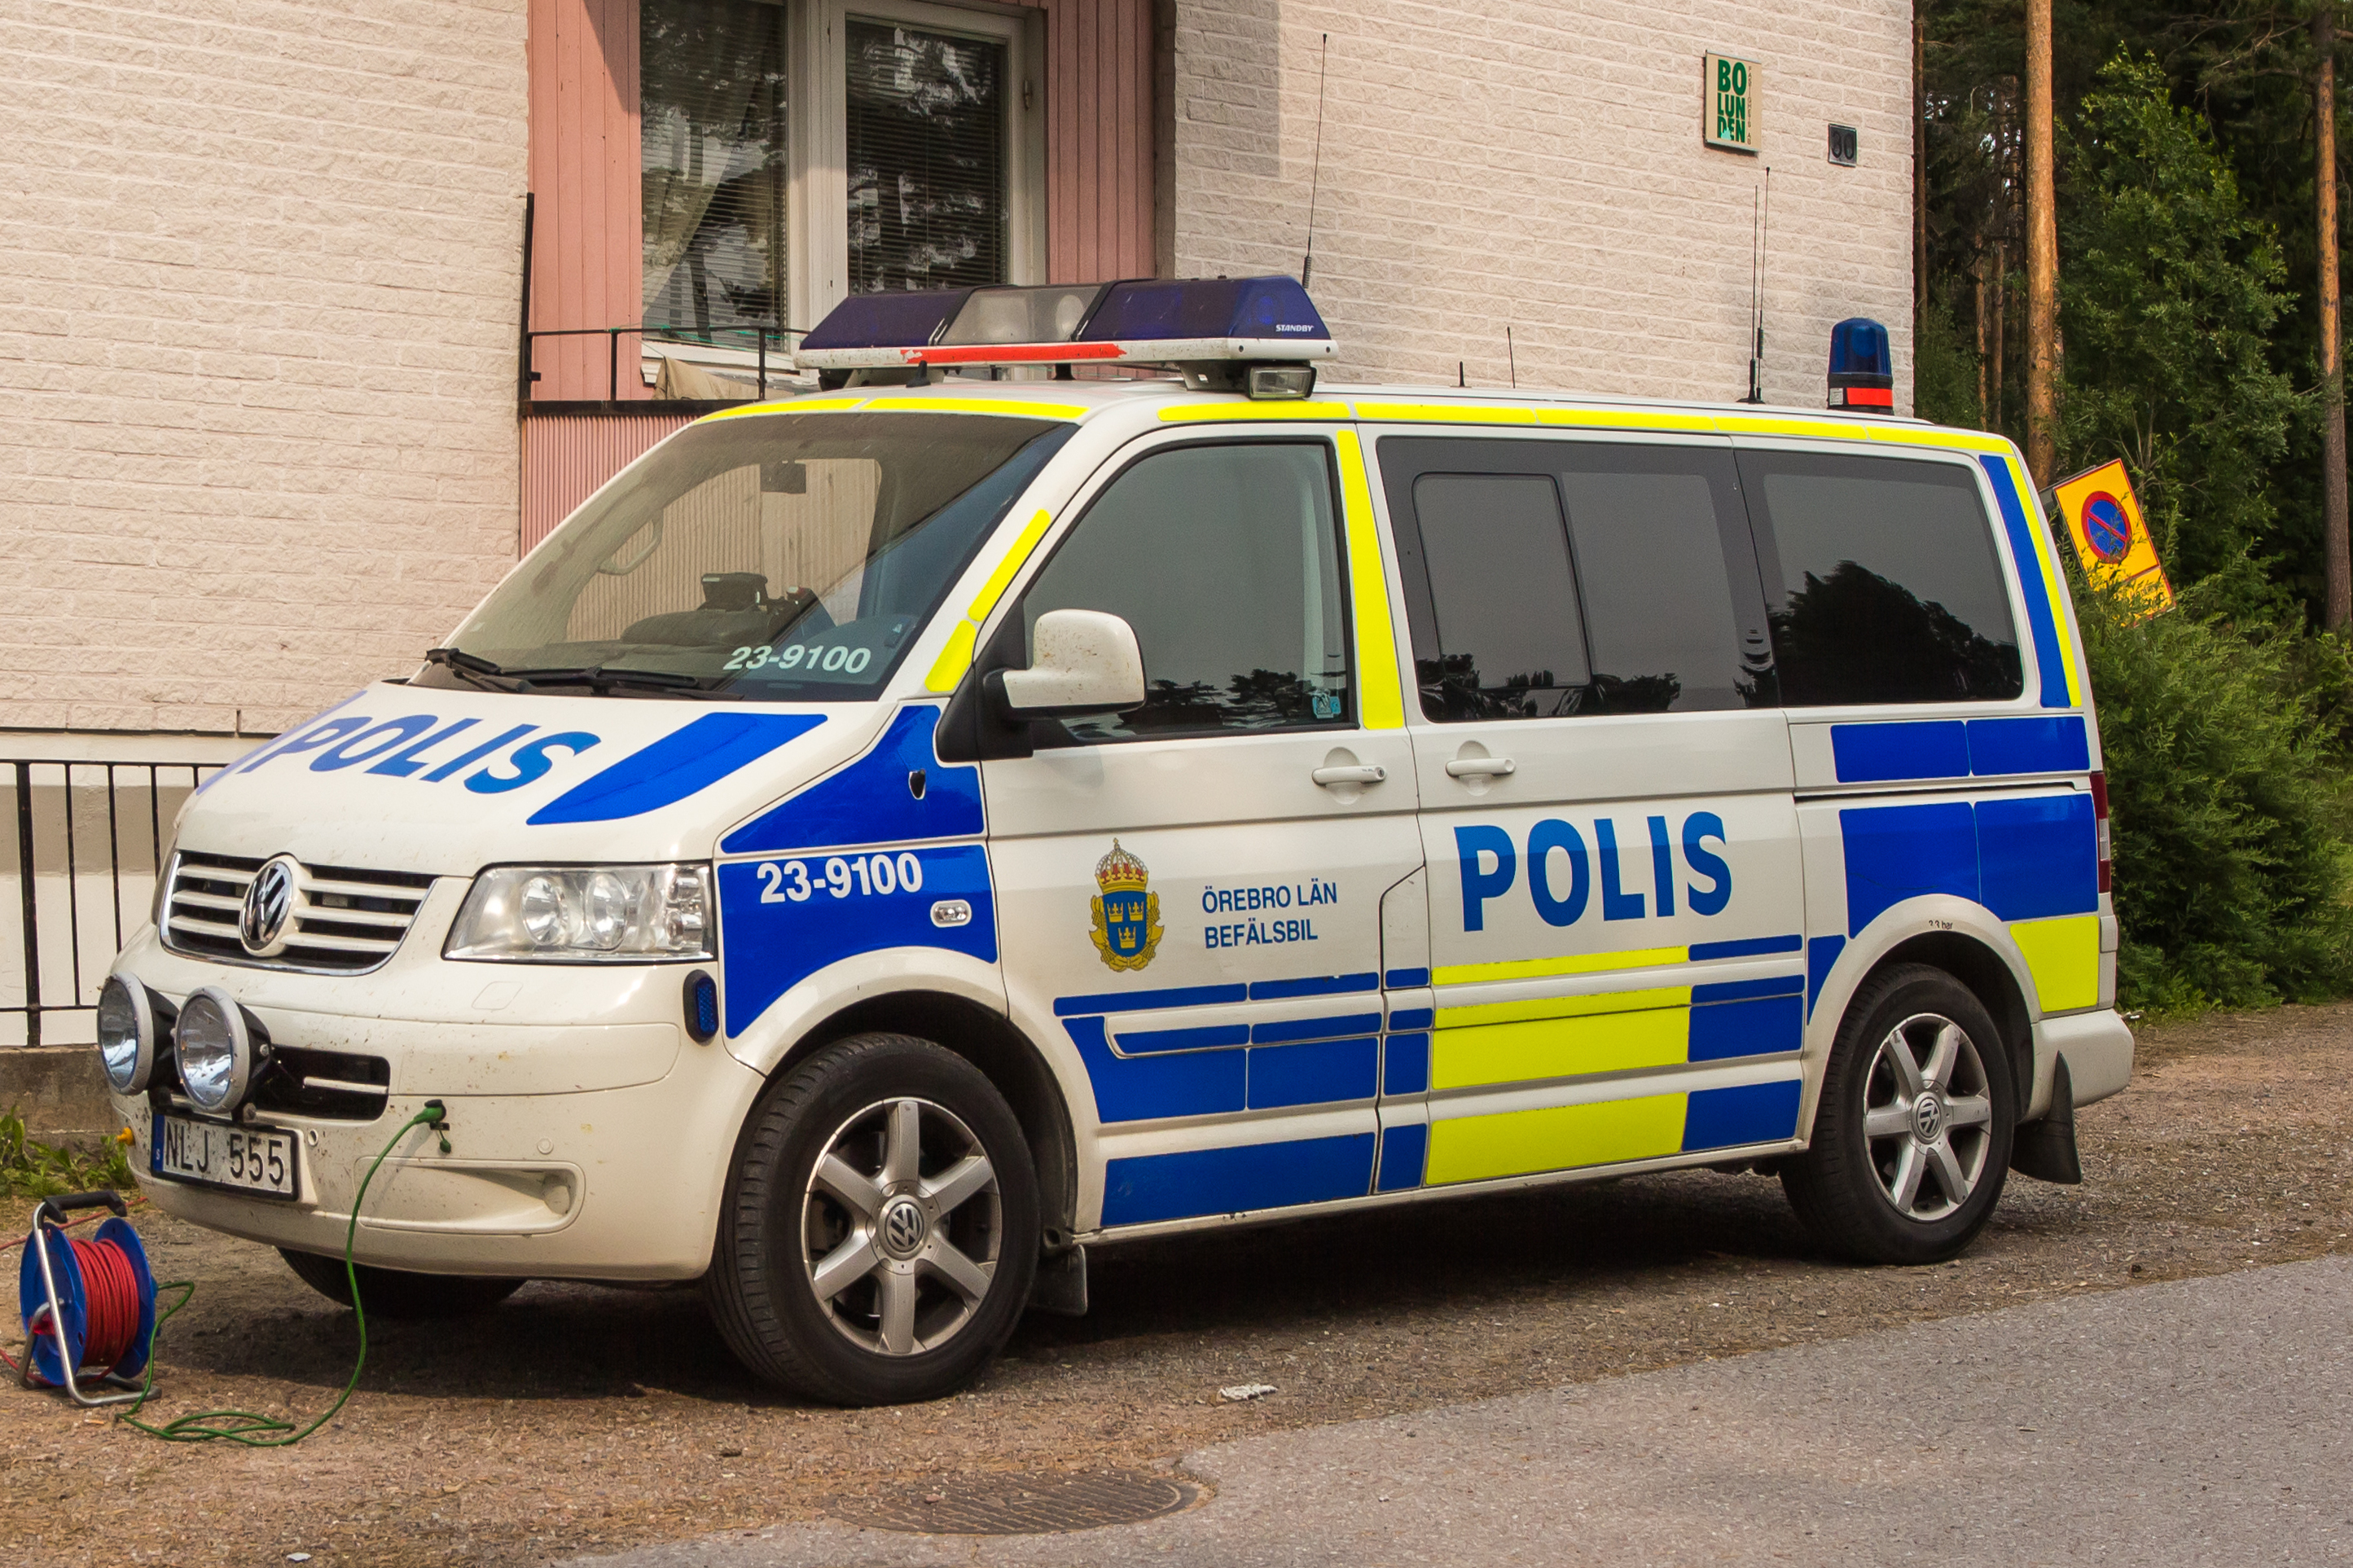 Swedish police command vehicle